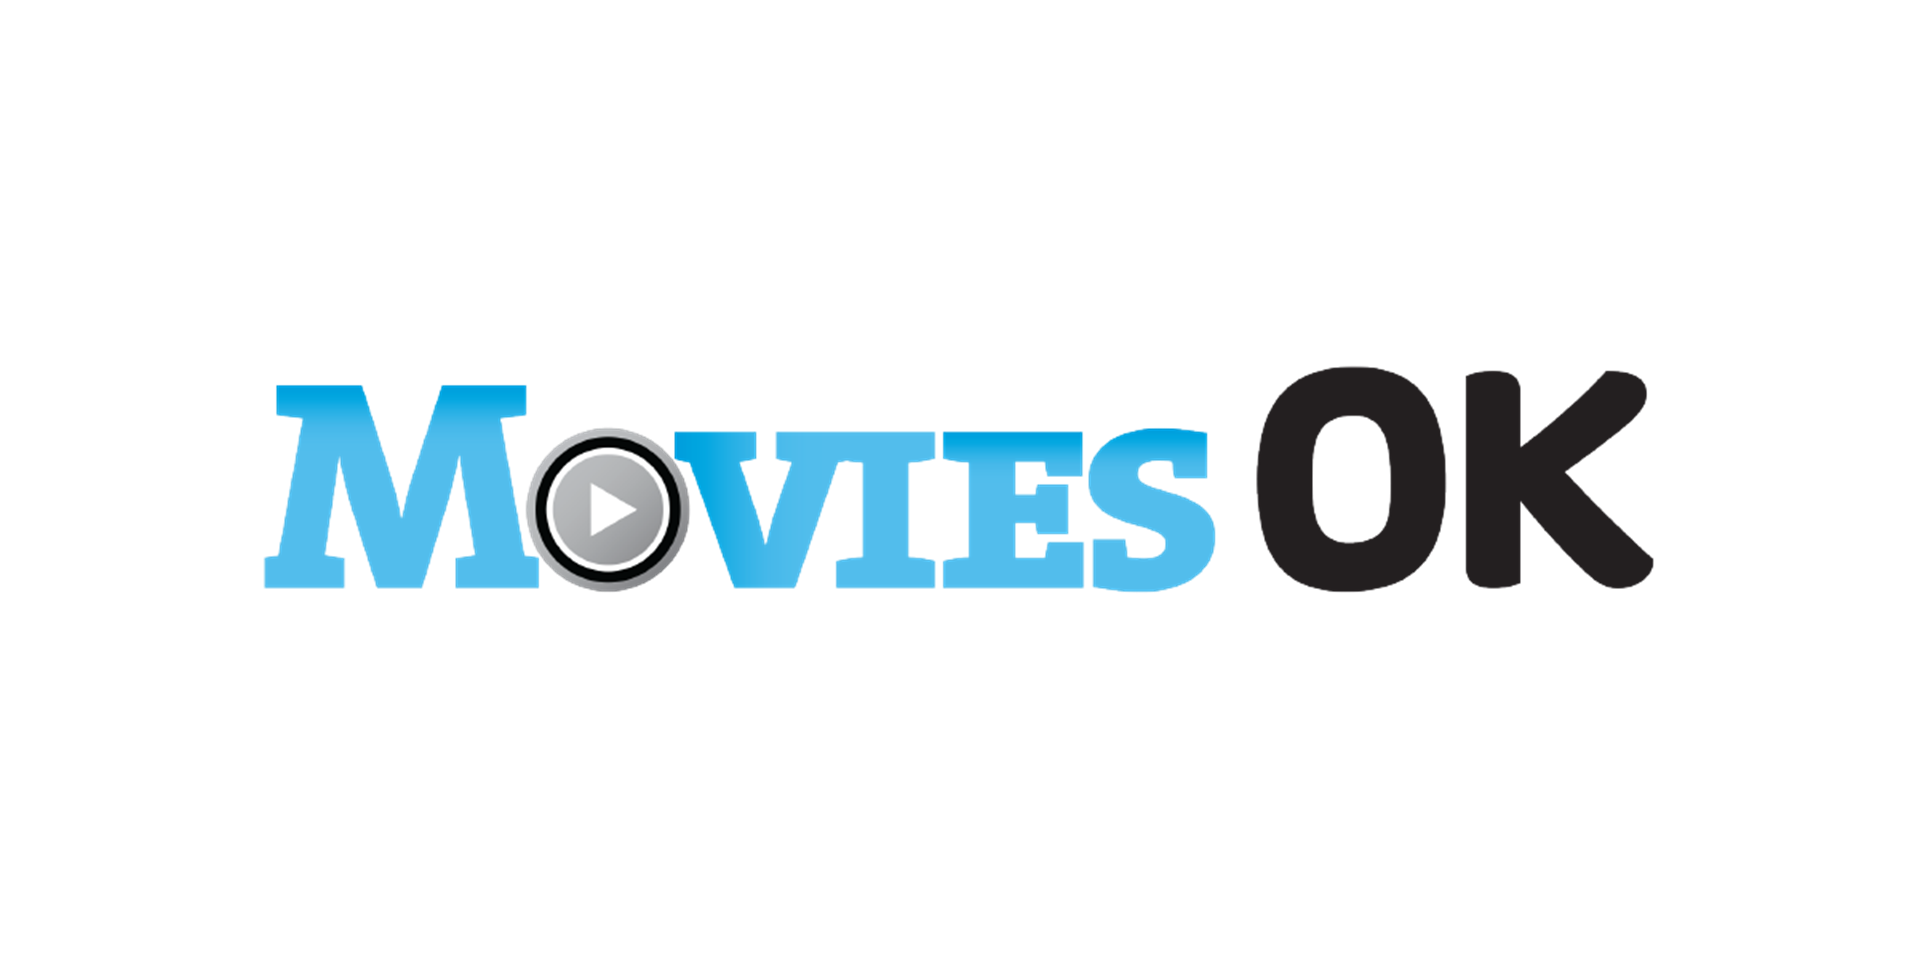 moviesok_logo_white_bg.png